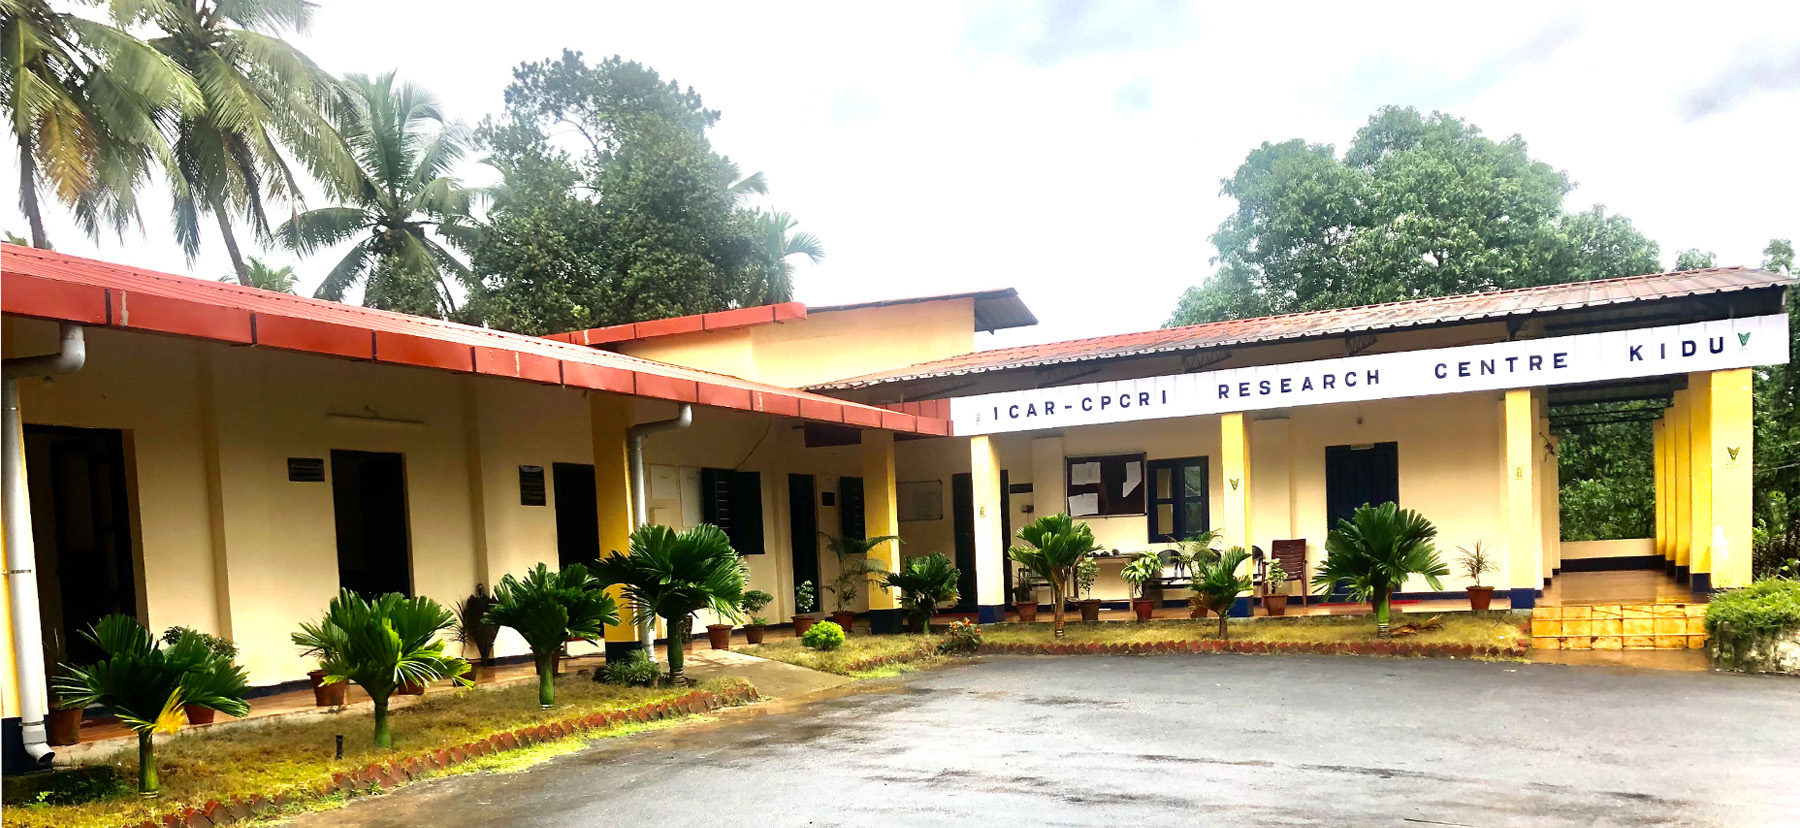 ICAR - CPCRI Research Centre, Kidu